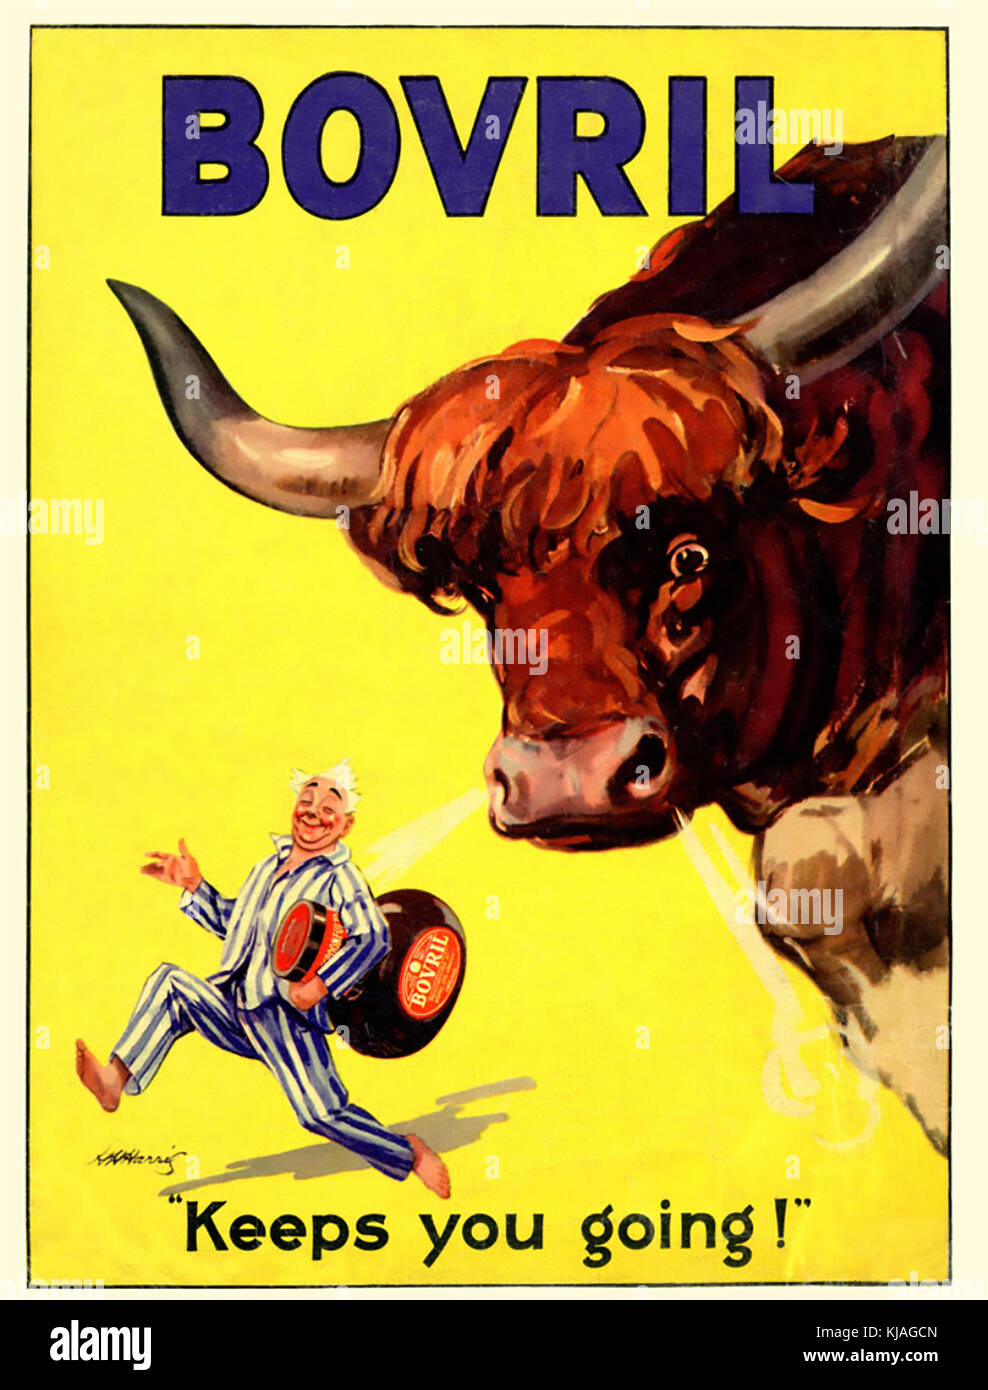 TAKE BOVRIL ADVERT published  1932 Stock Photo